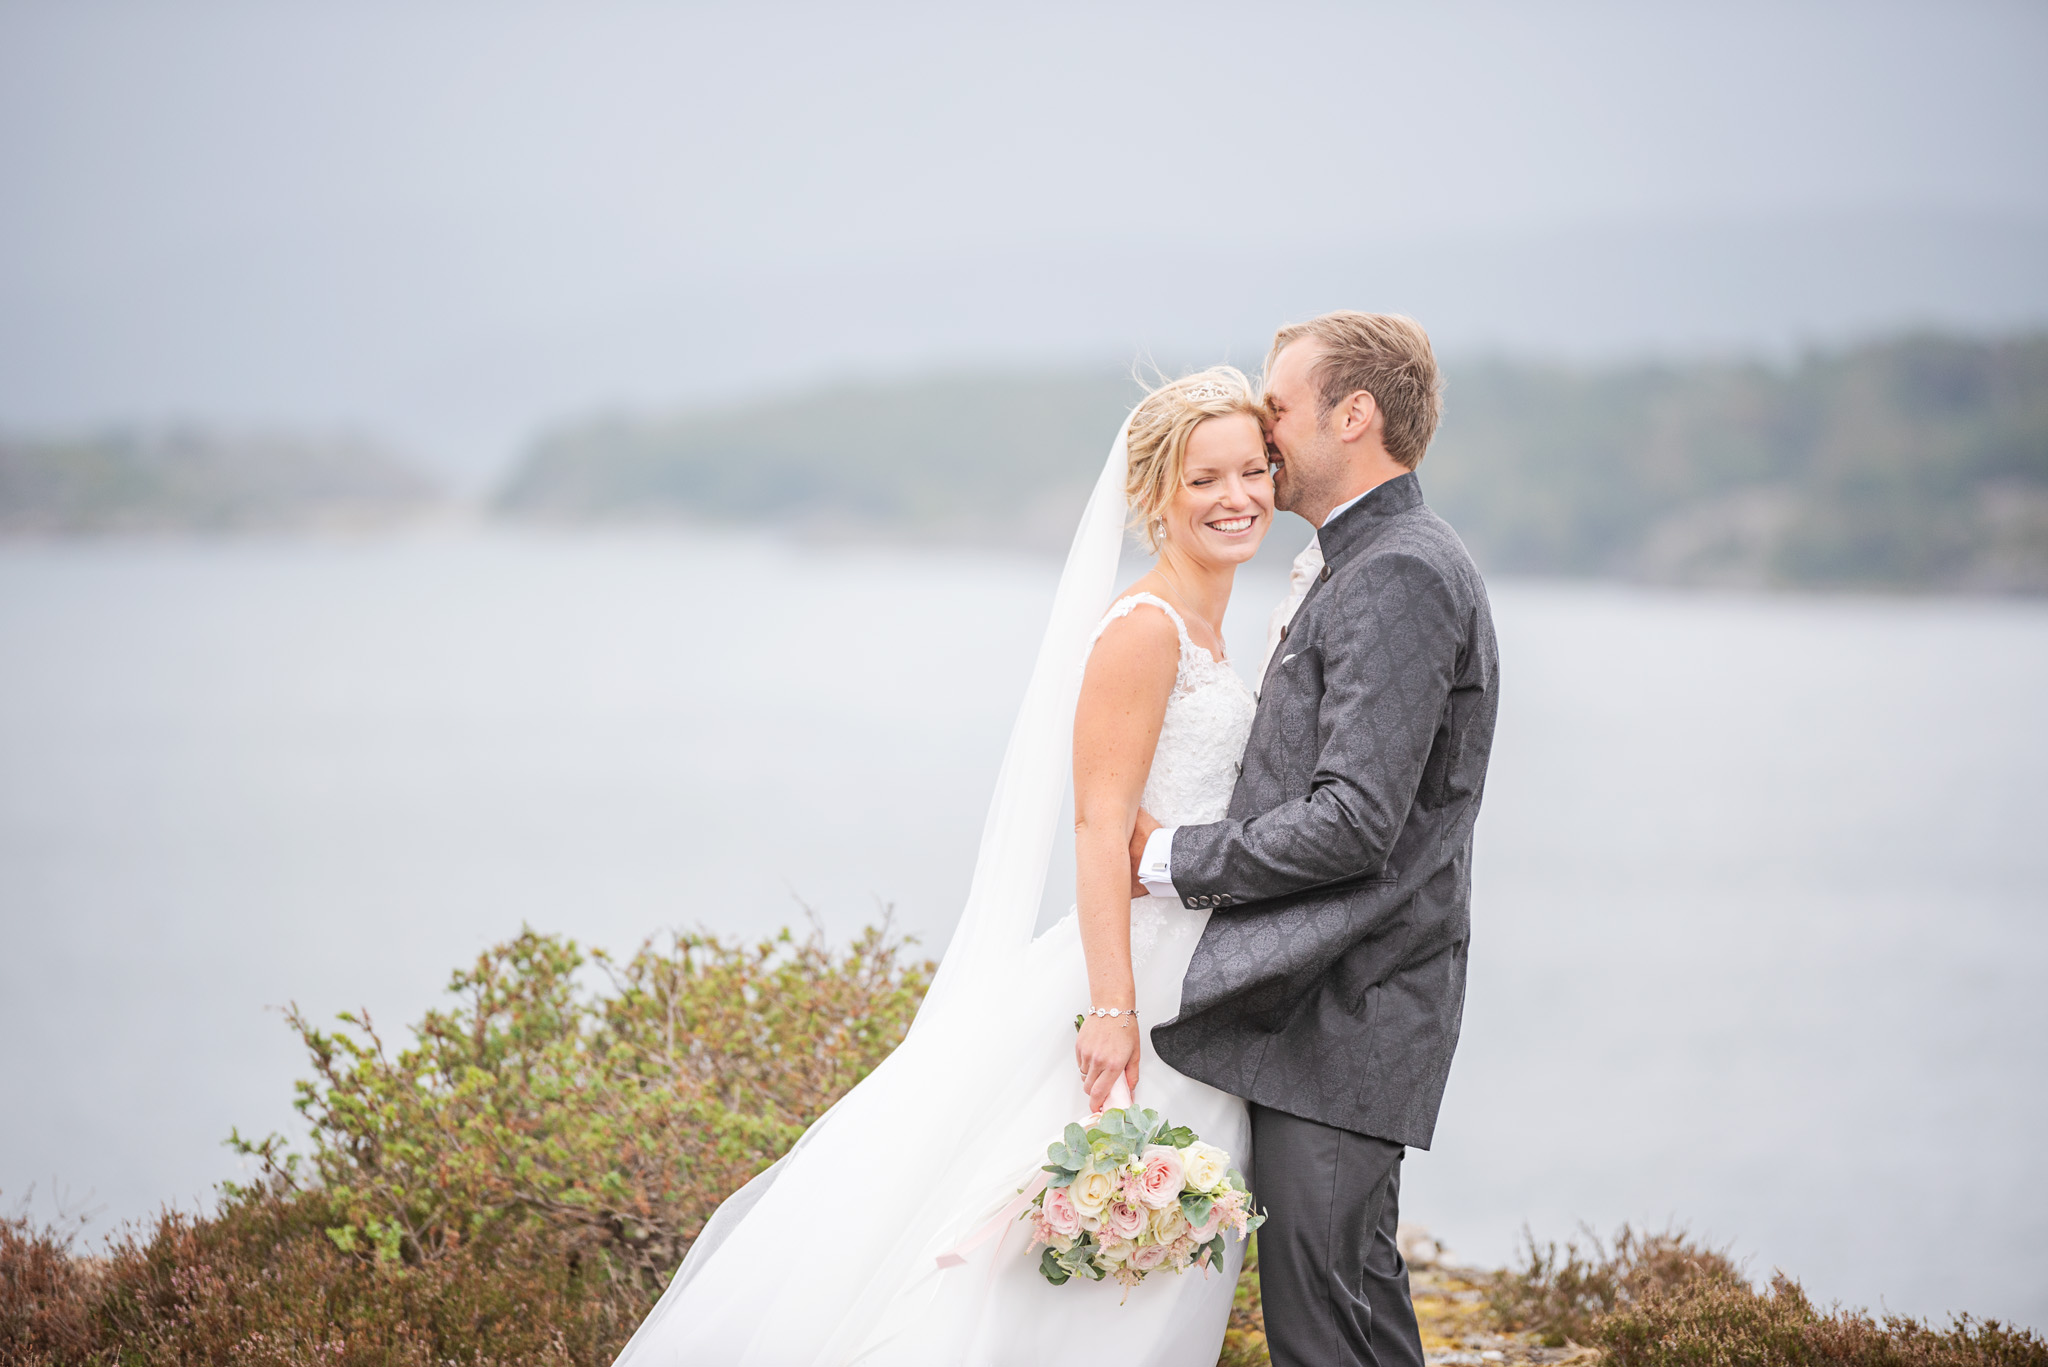 Caroline & Christoffer – Bröllop på Tjörn